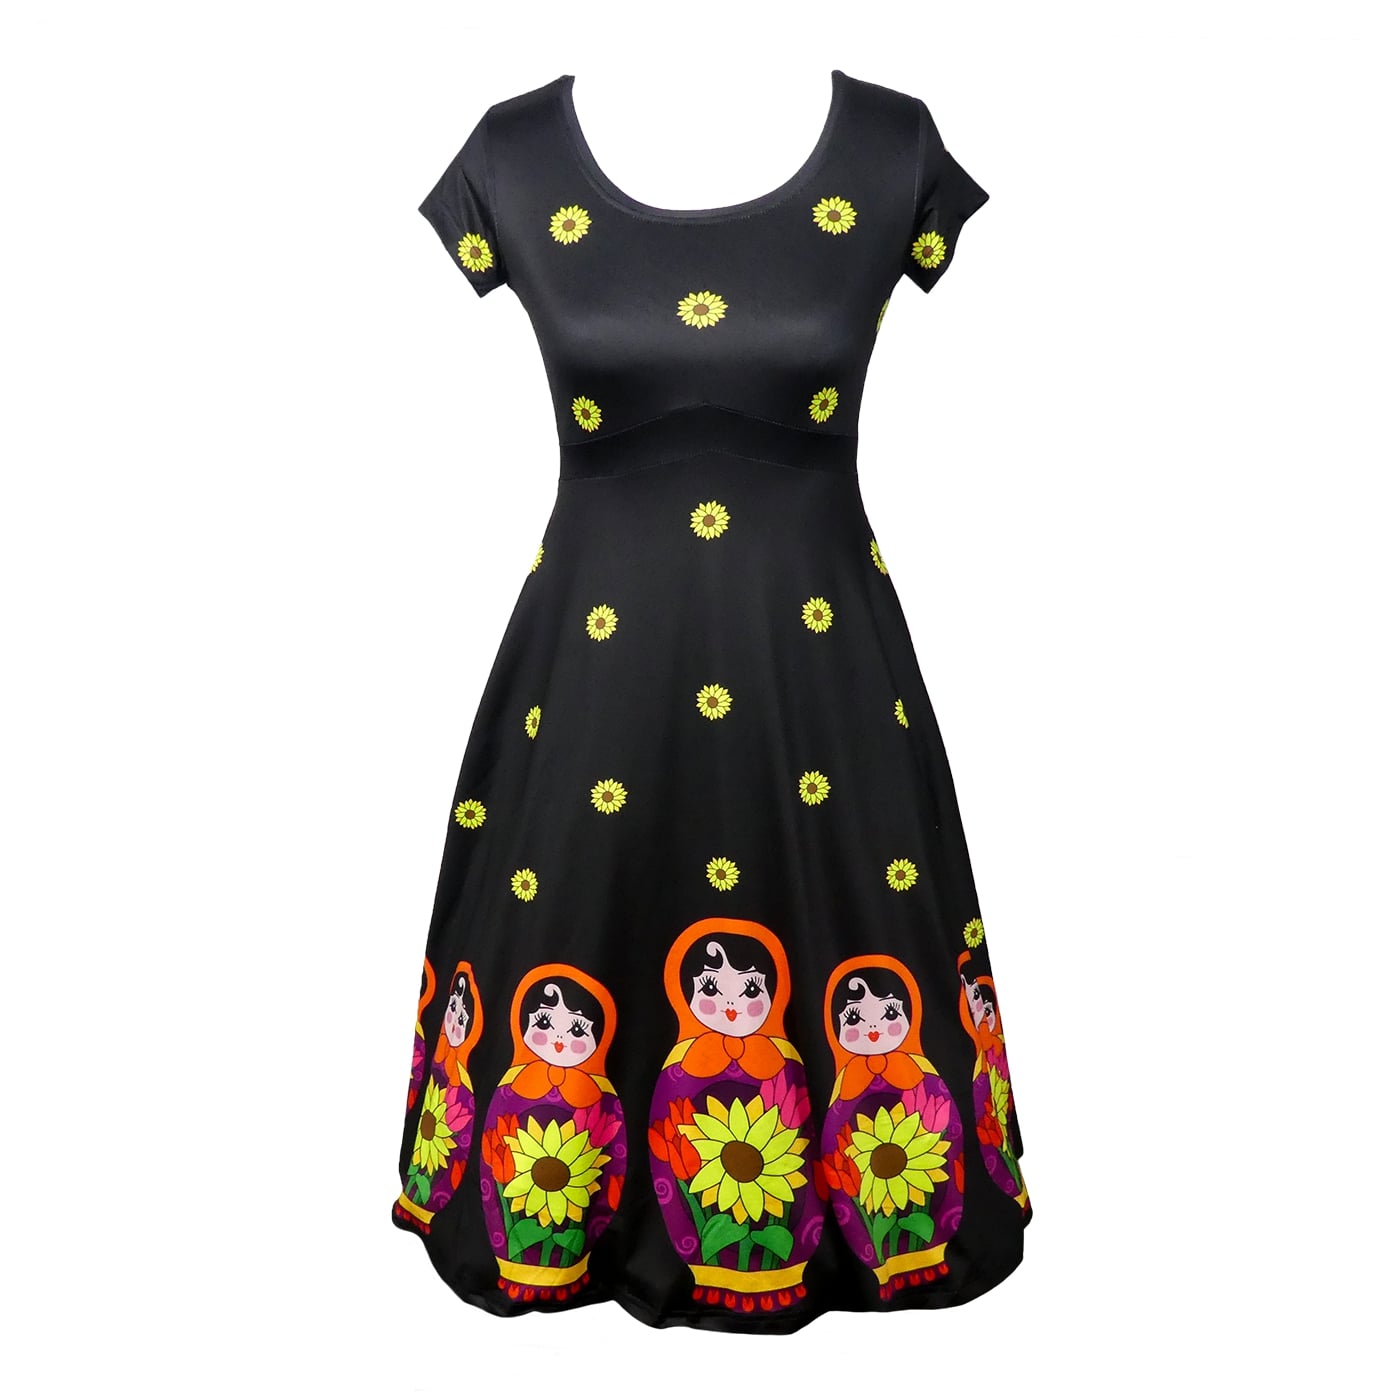 Nesting Babette Tea Dress by RainbowsAndFairies.com (Nesting Dolls - Babushka - Matryoshka - Sunflowers - Dress With Pockets - Rockabilly - Vintage Inspired - Rock & Roll) - SKU: CL_TEADR_BABET_NST - Pic 01